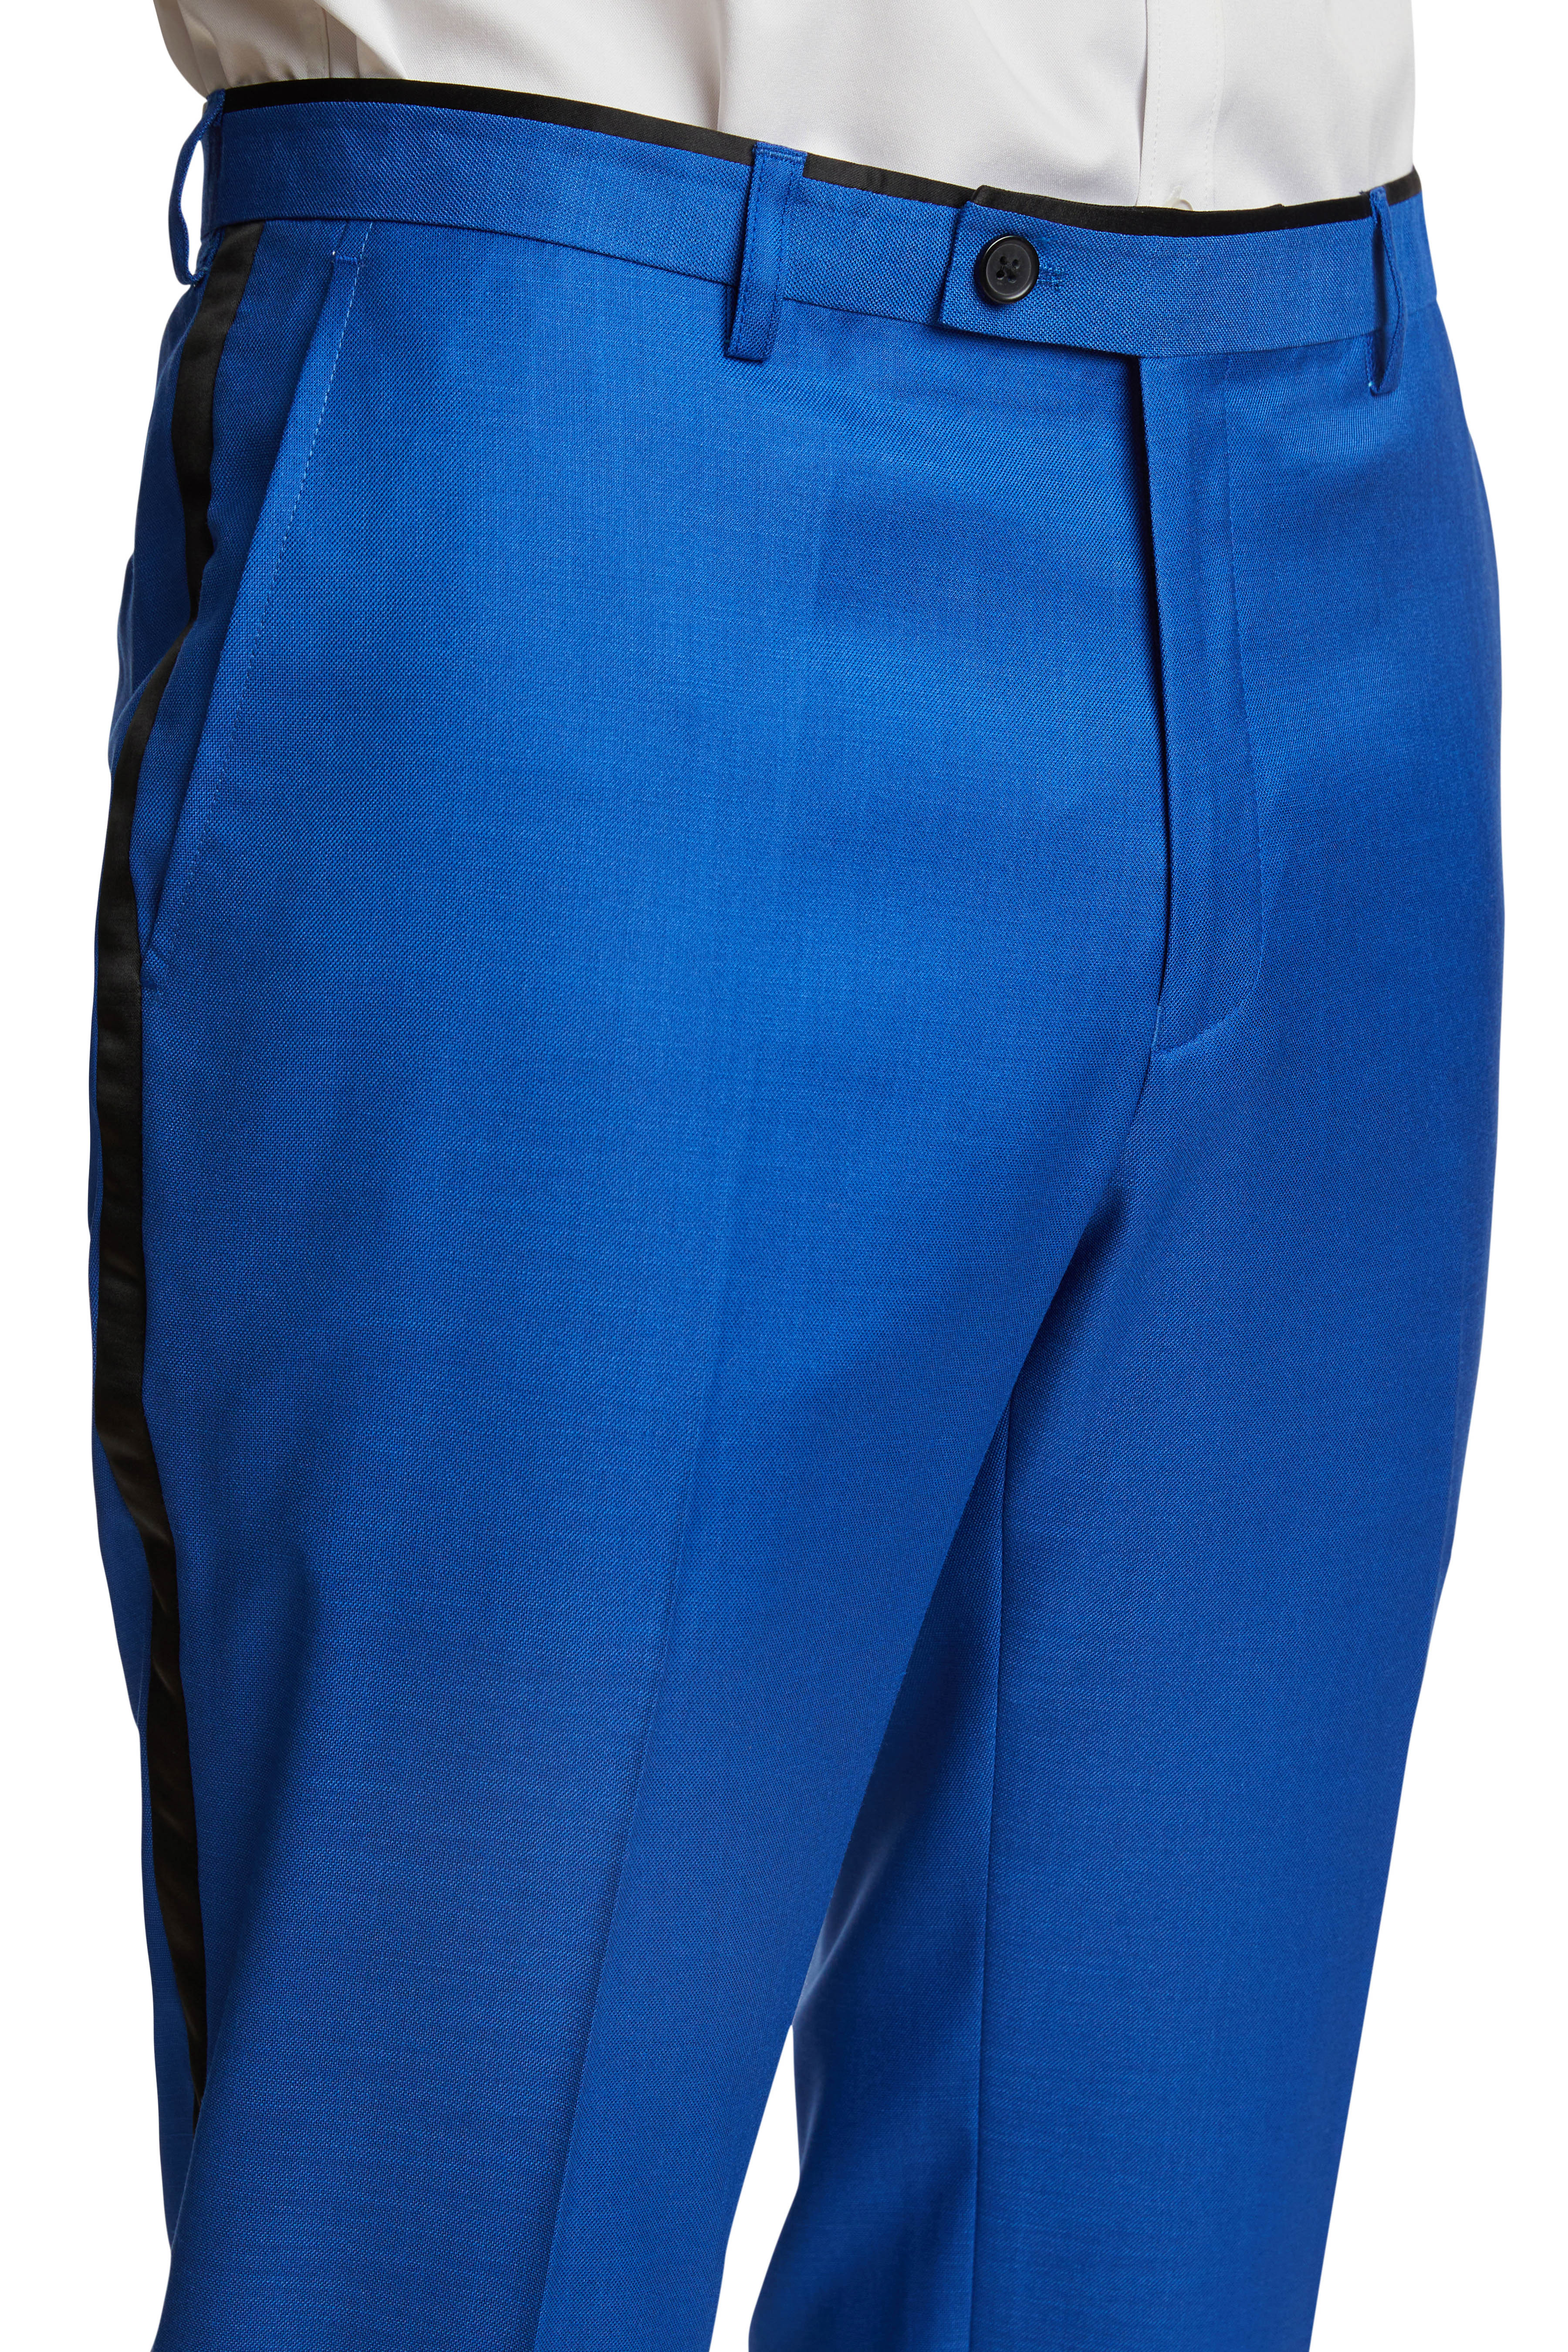 Sloane Tux Pants - slim - Royal Blue